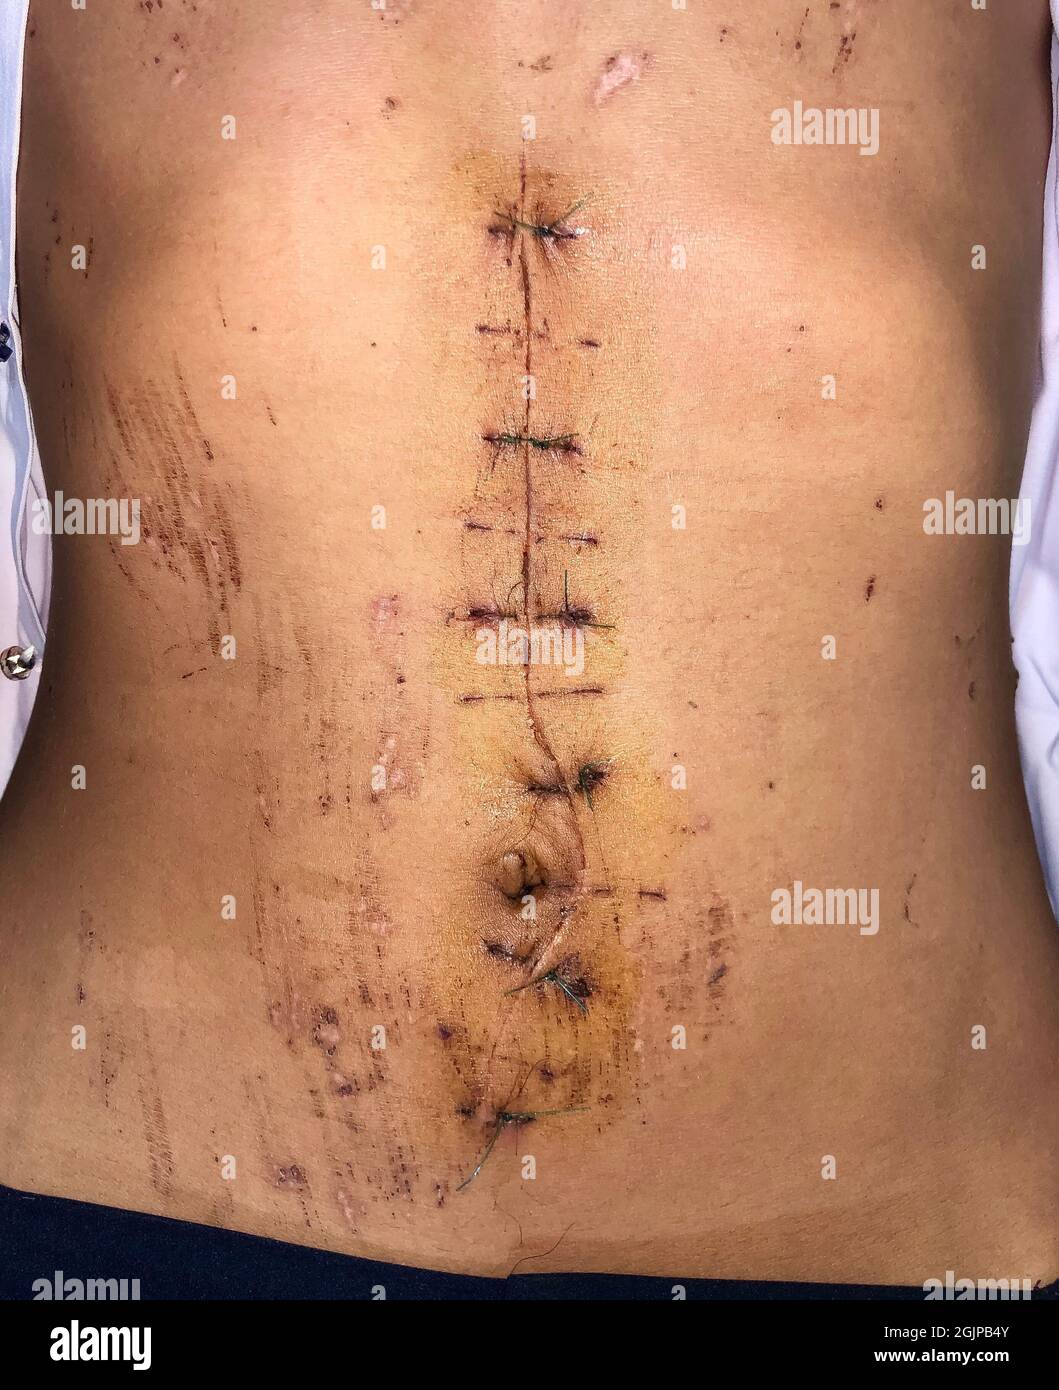 Laparotomy or midline incision at abdomen of Asian man. Stock Photo